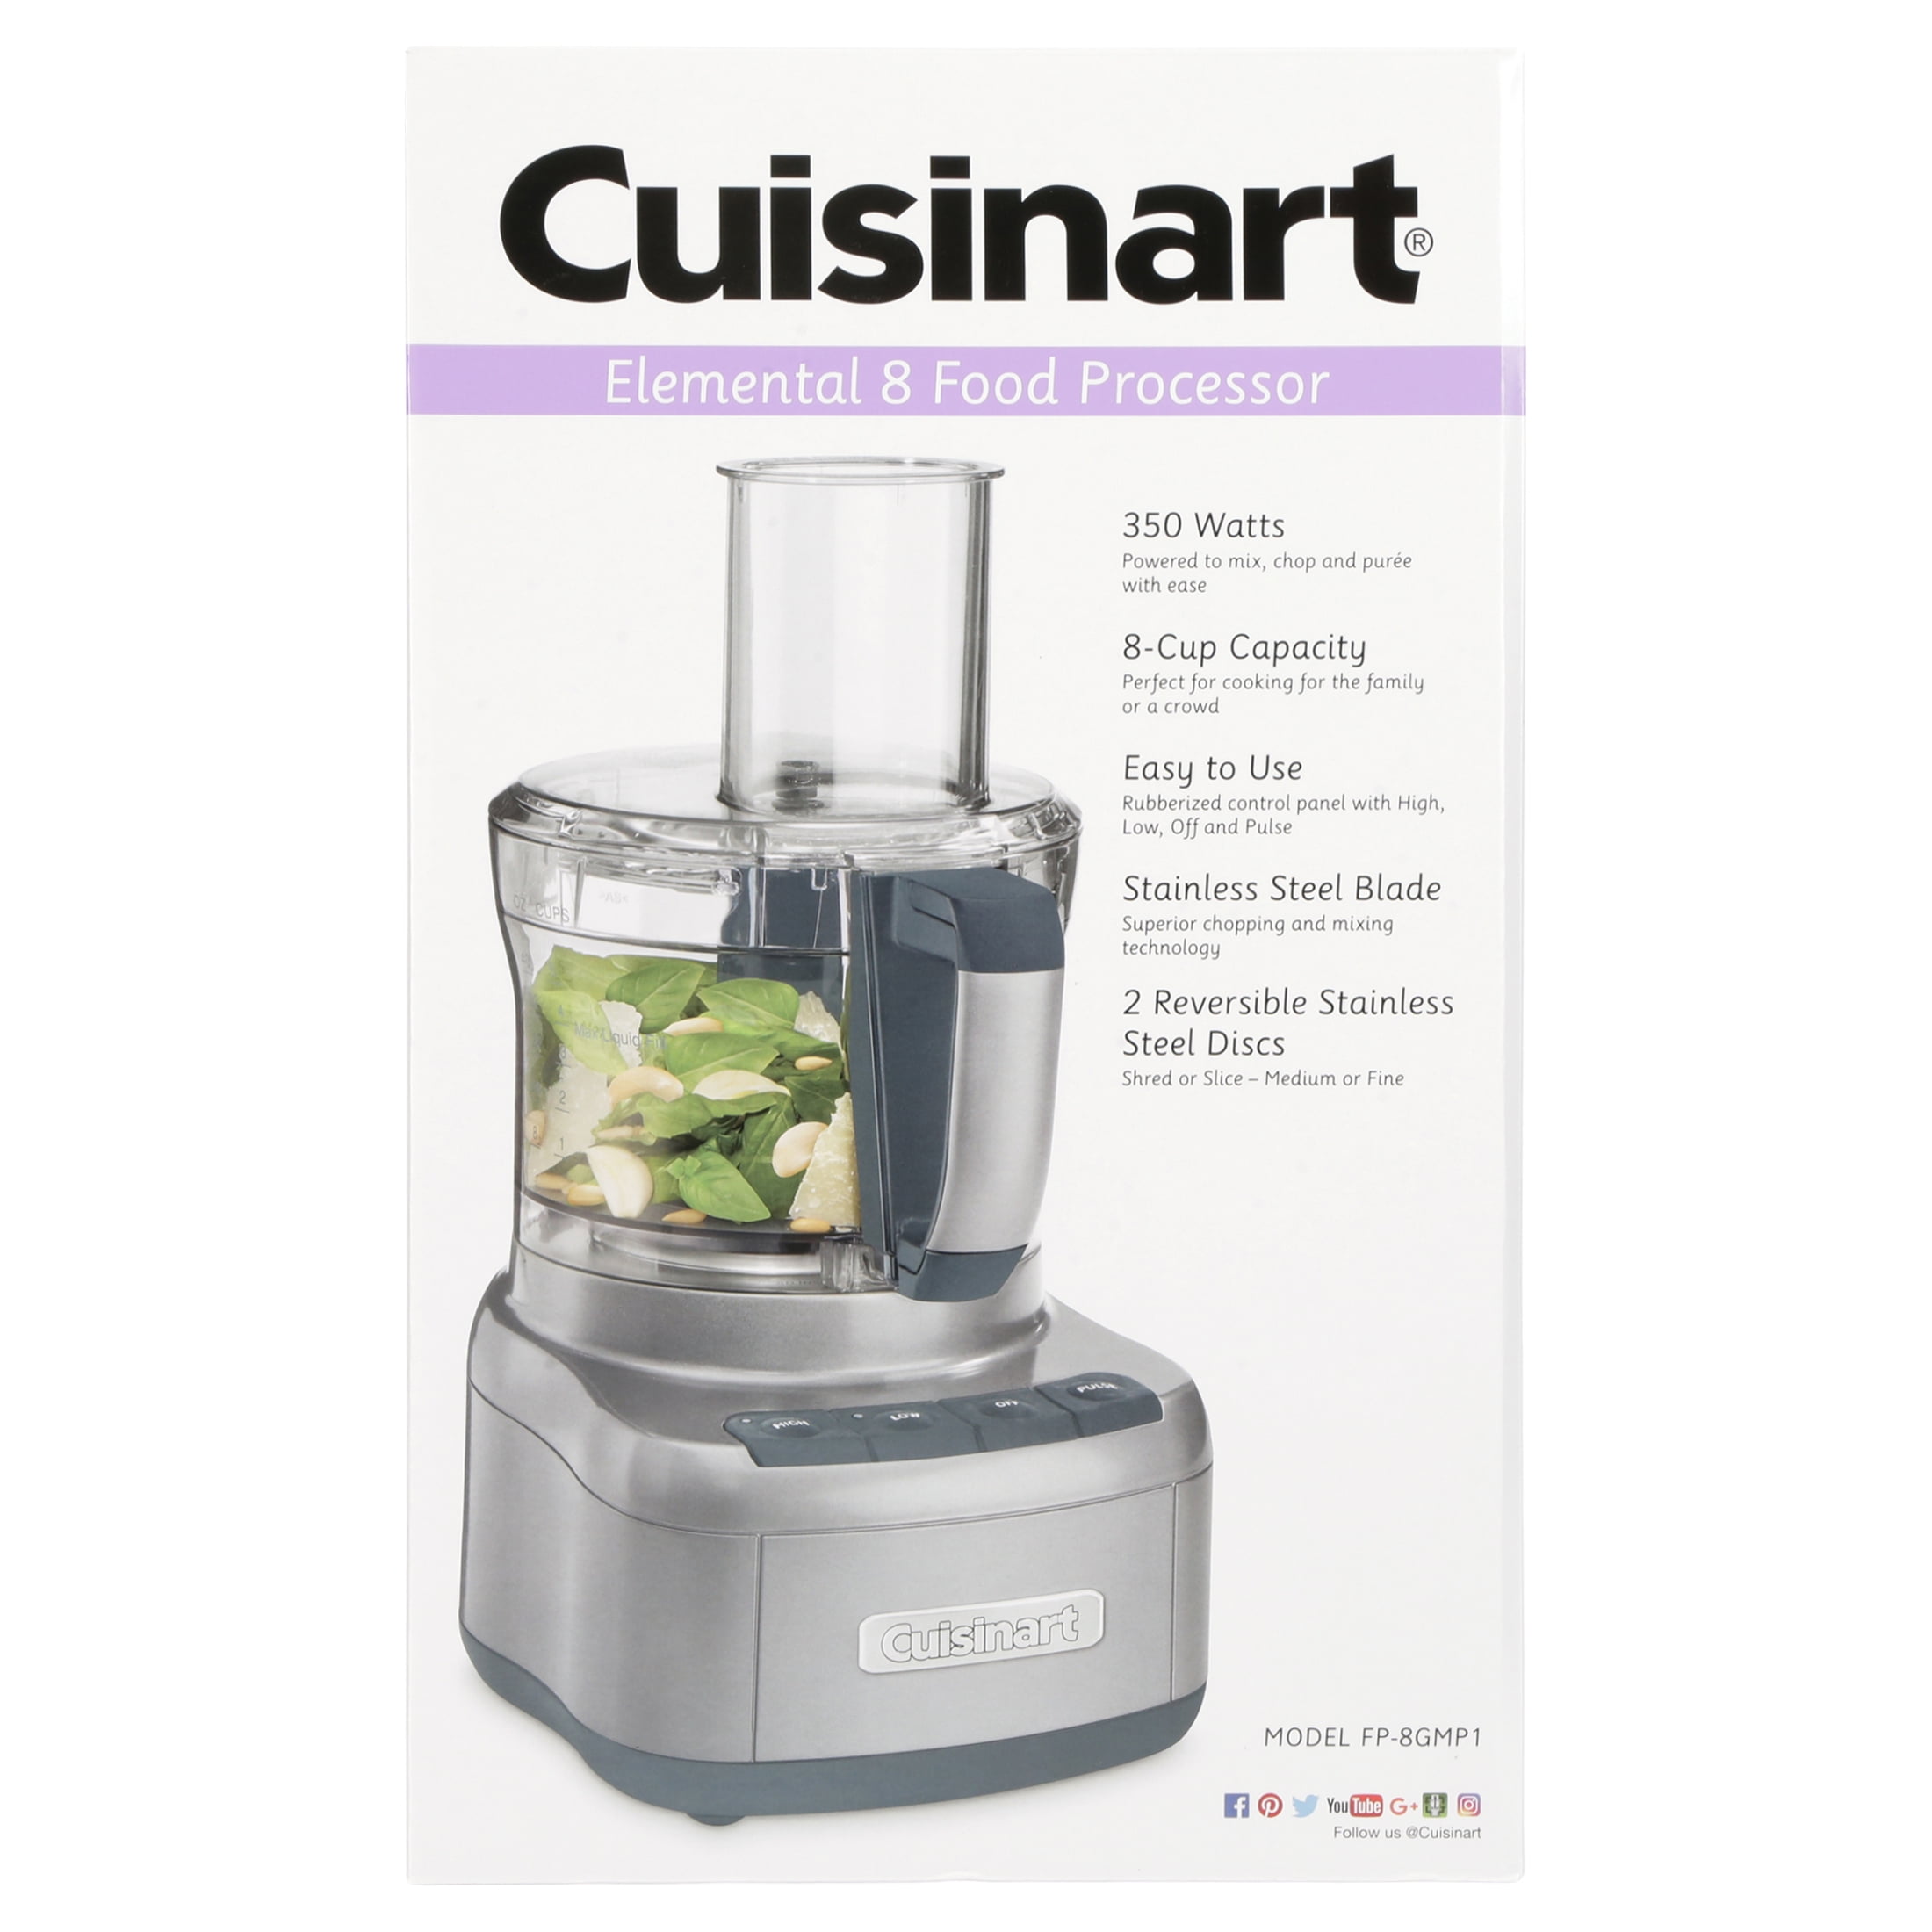 CUISINART Elemental 8 Food Processor - appliances - by owner